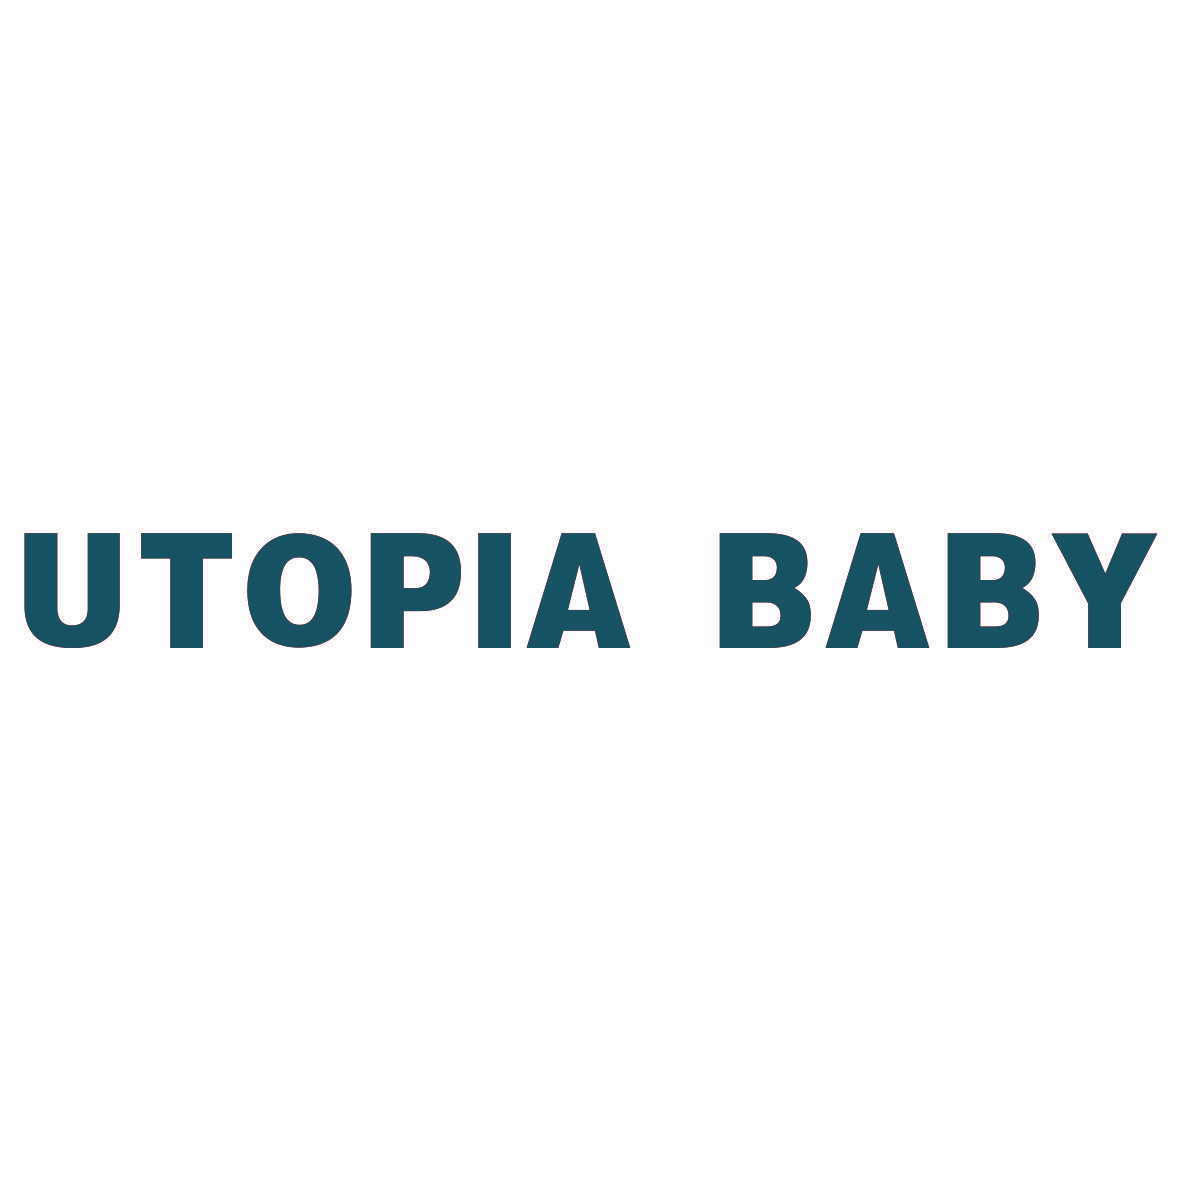 UTOPIA BABY